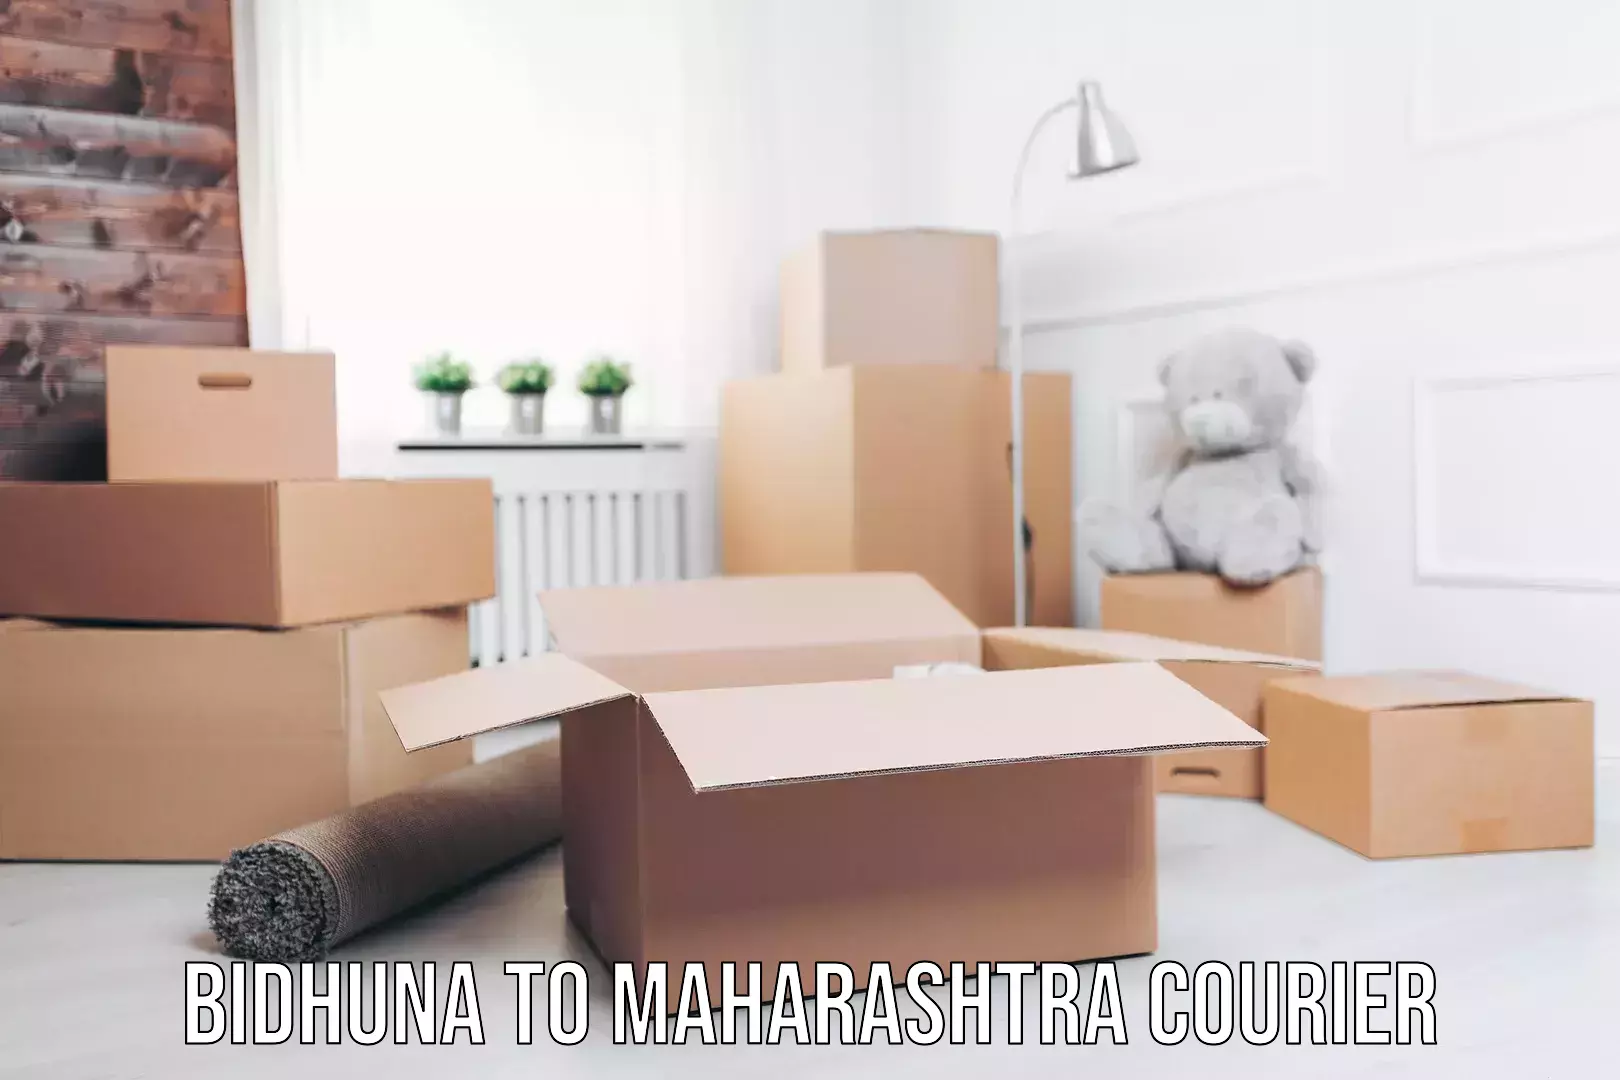 State-of-the-art courier technology Bidhuna to Maharashtra